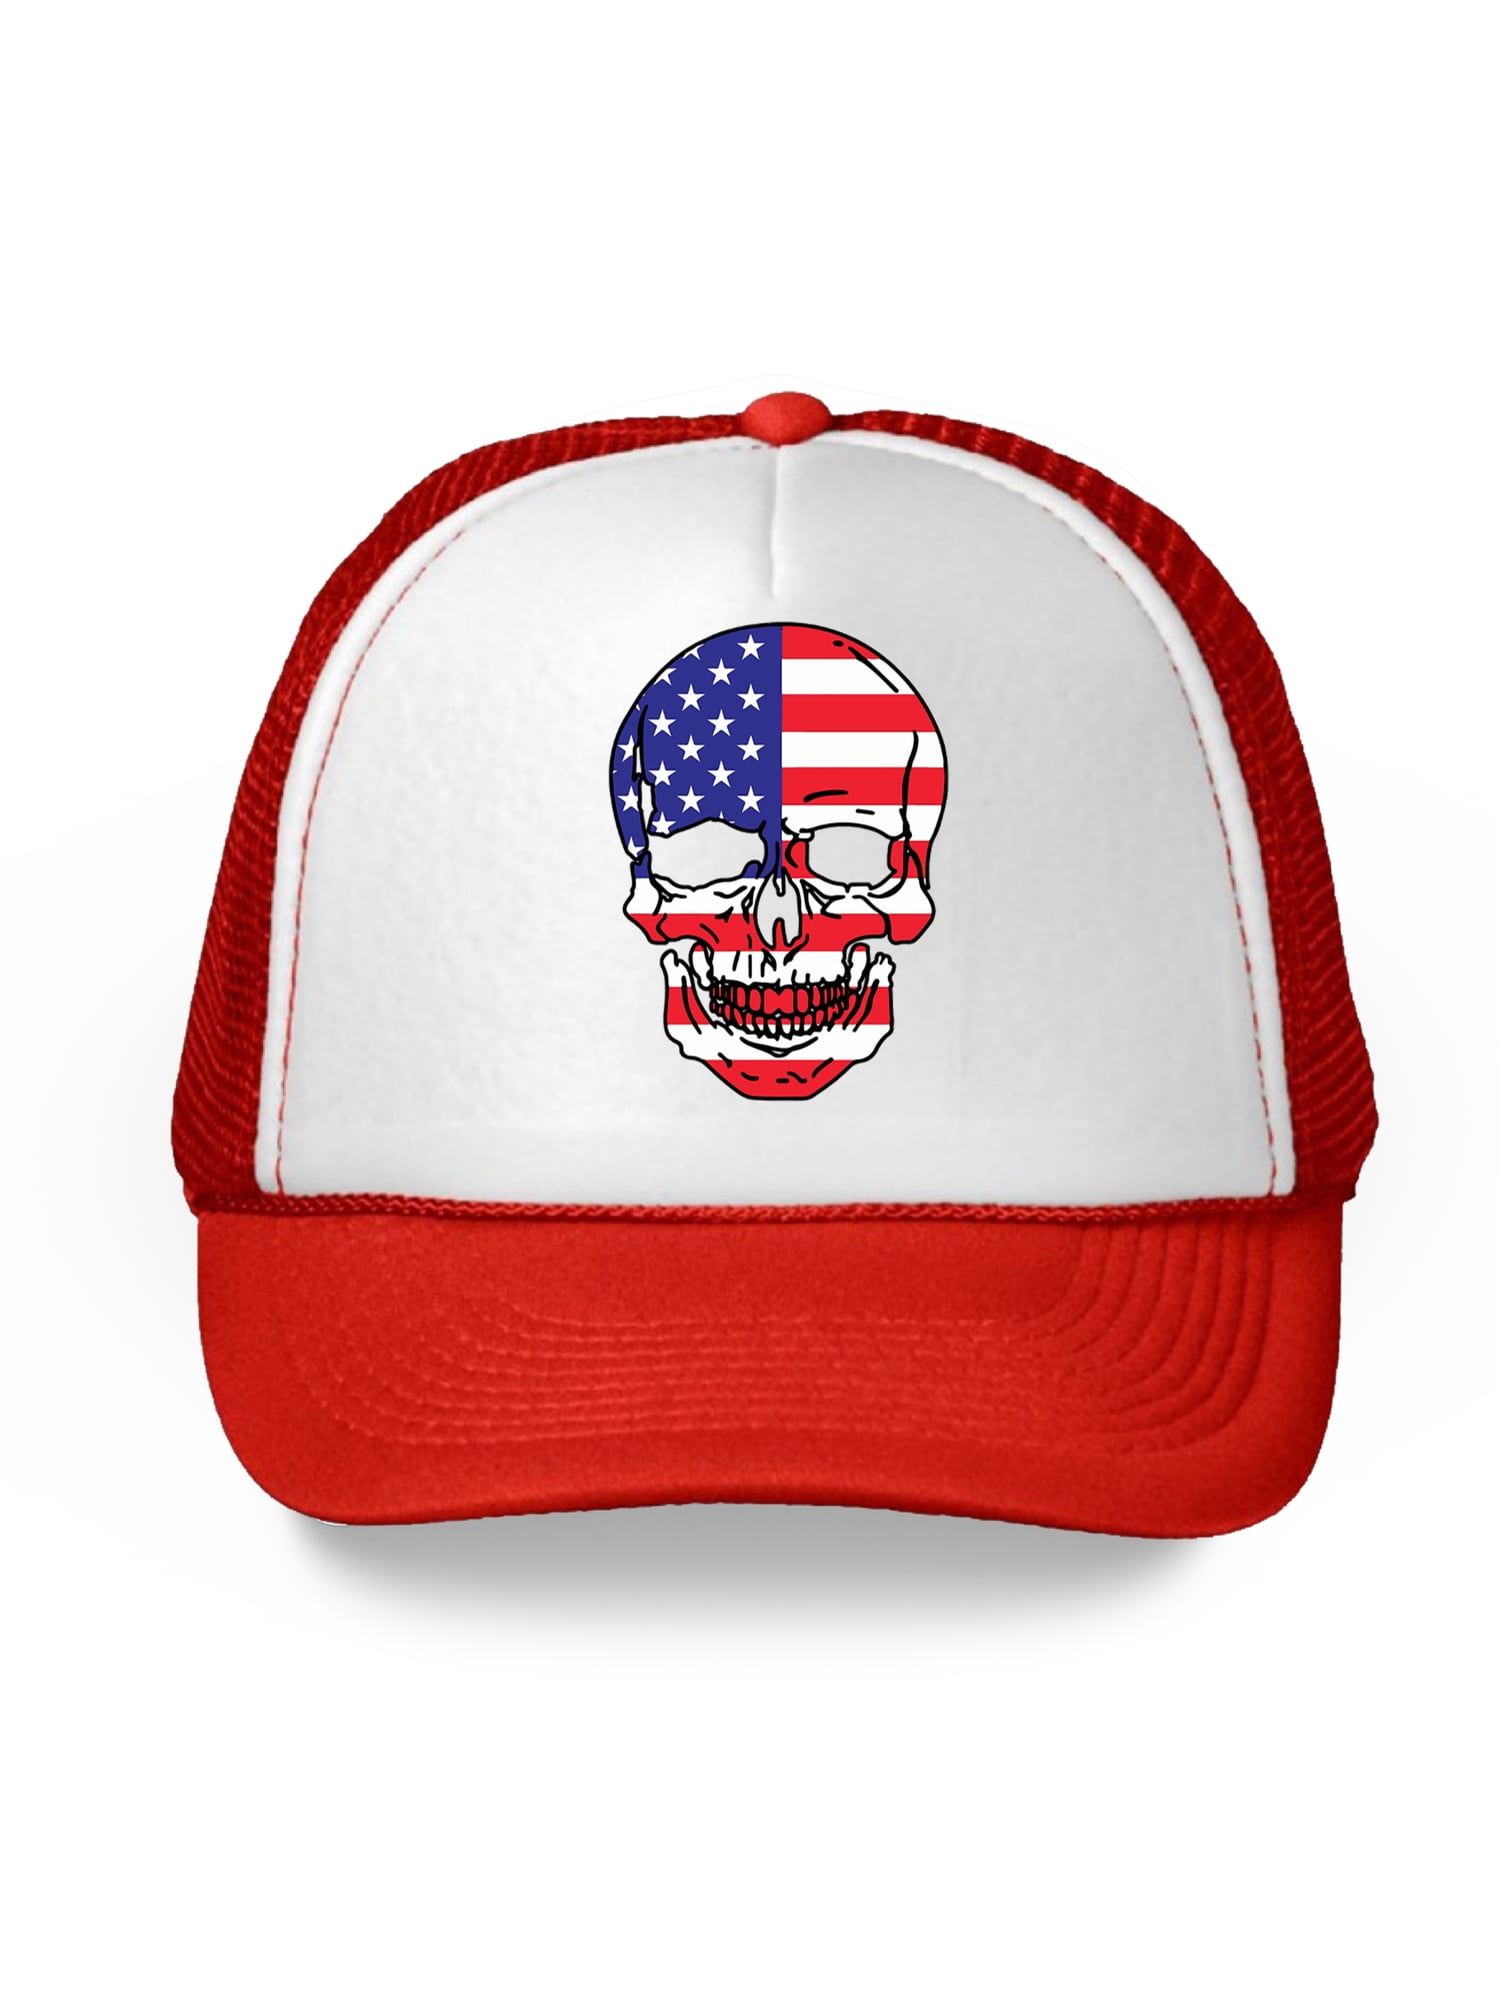 Unisex Mens Women Cap Skull Ghost Flag Race Cotton Designed Outdoor Cap Hat